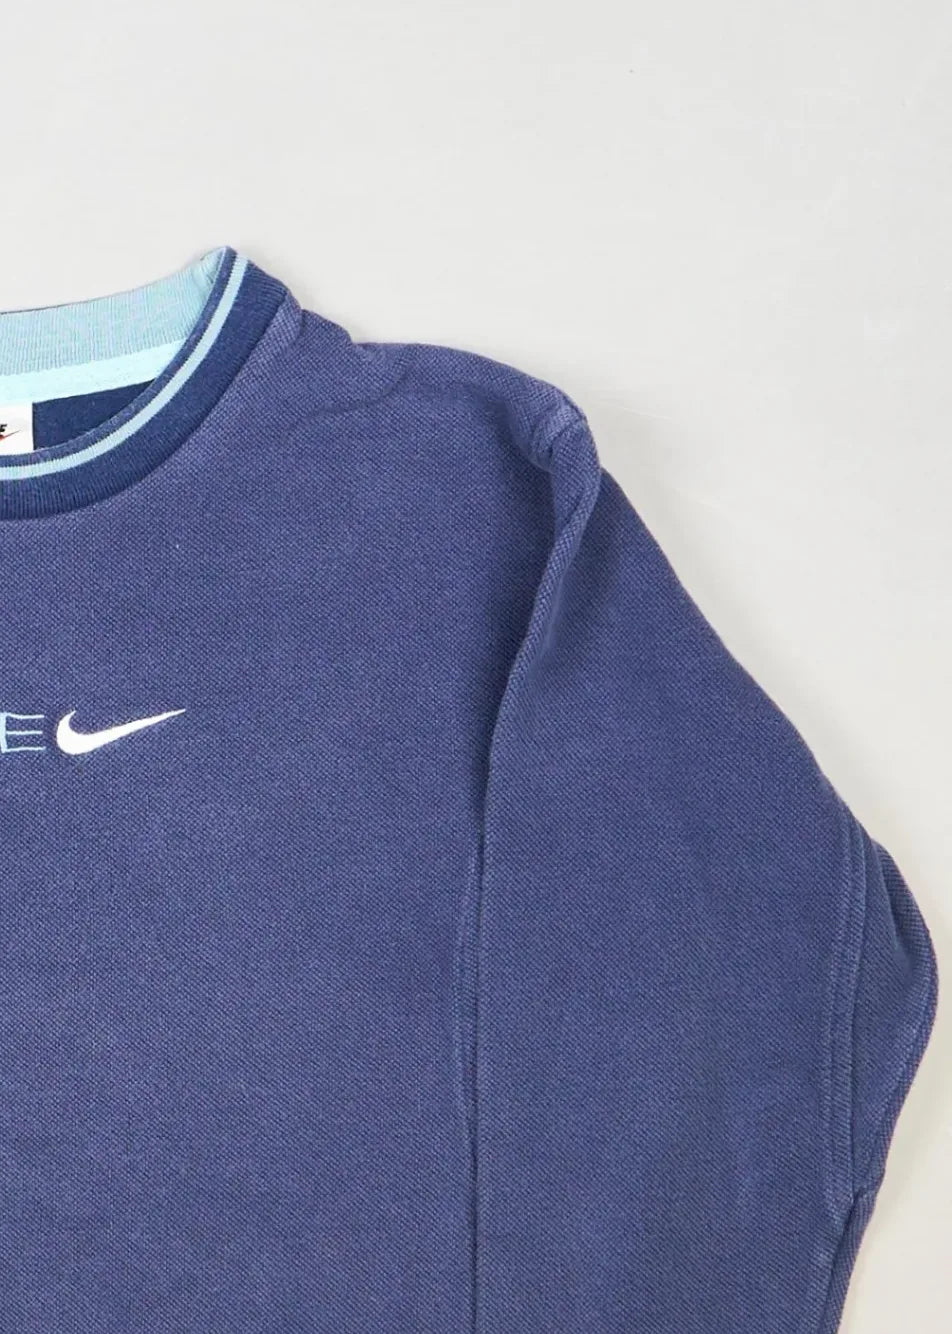 Nike - Sweatshirt (XS) Right